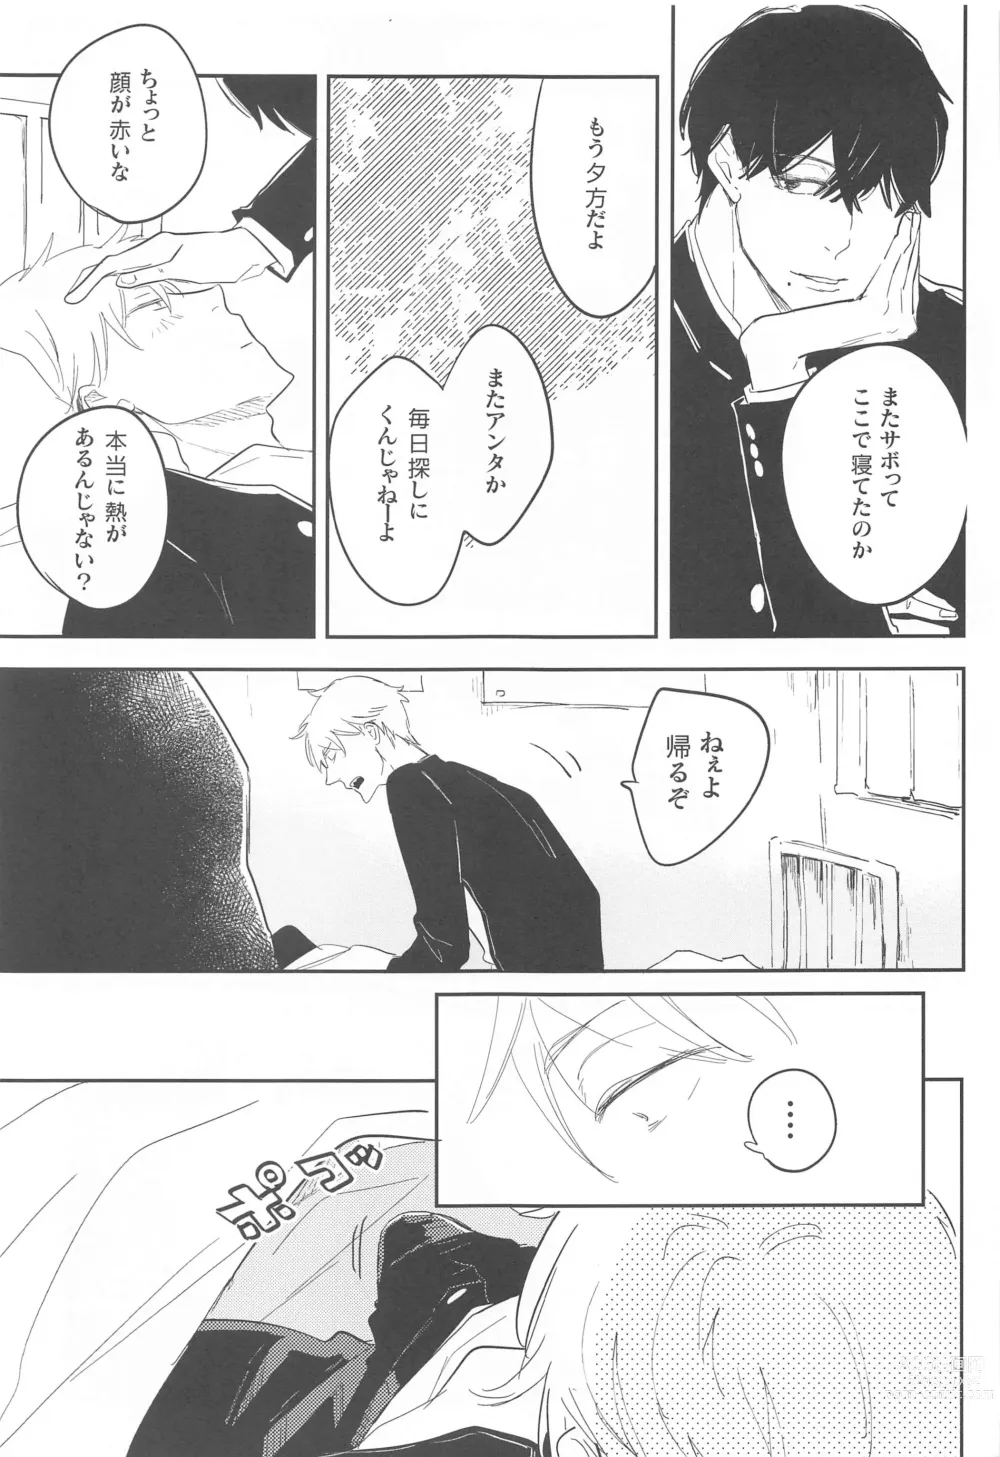 Page 10 of doujinshi Ame to Muchi